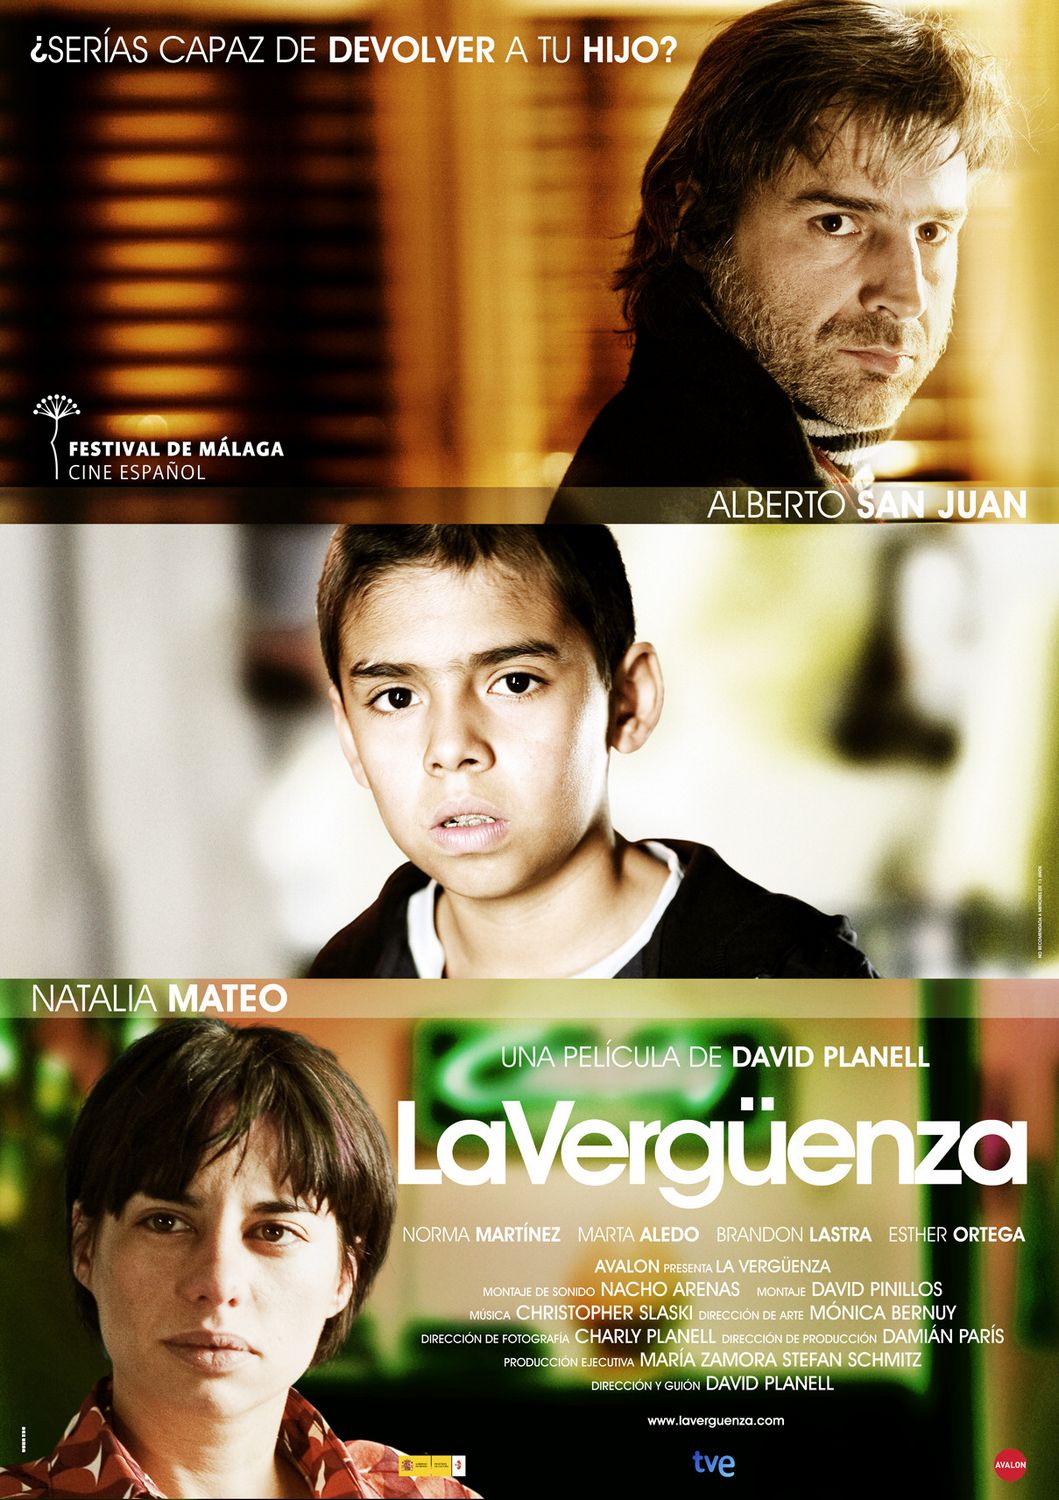 Extra Large Movie Poster Image for La vergüenza 